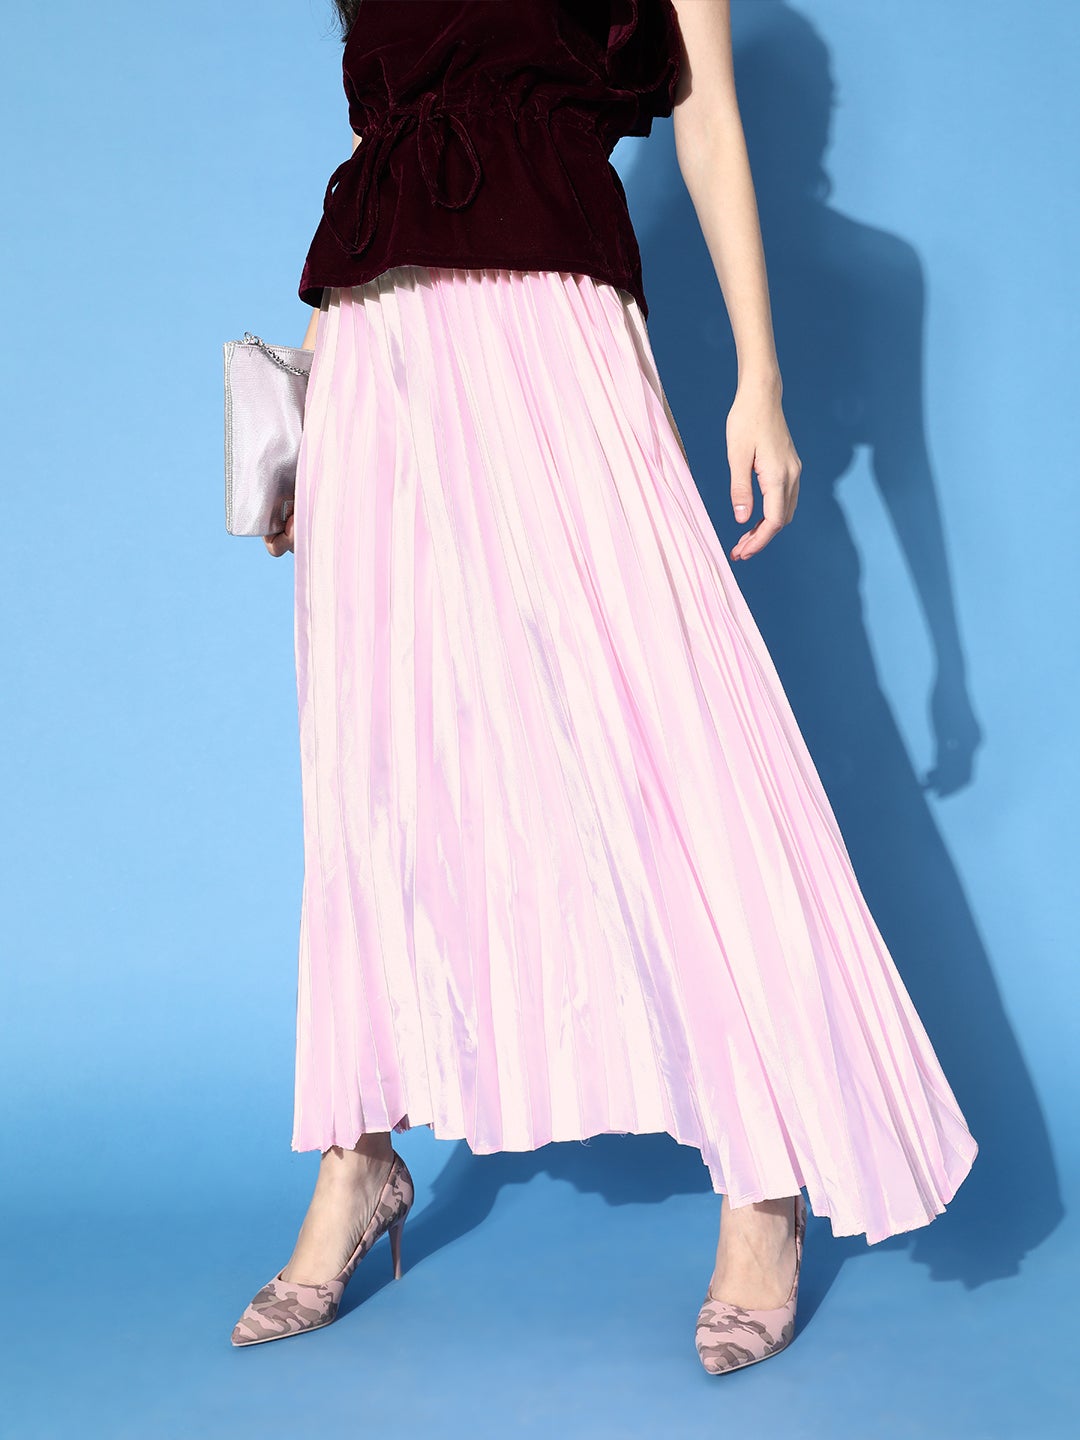 Pink Satin Skirt